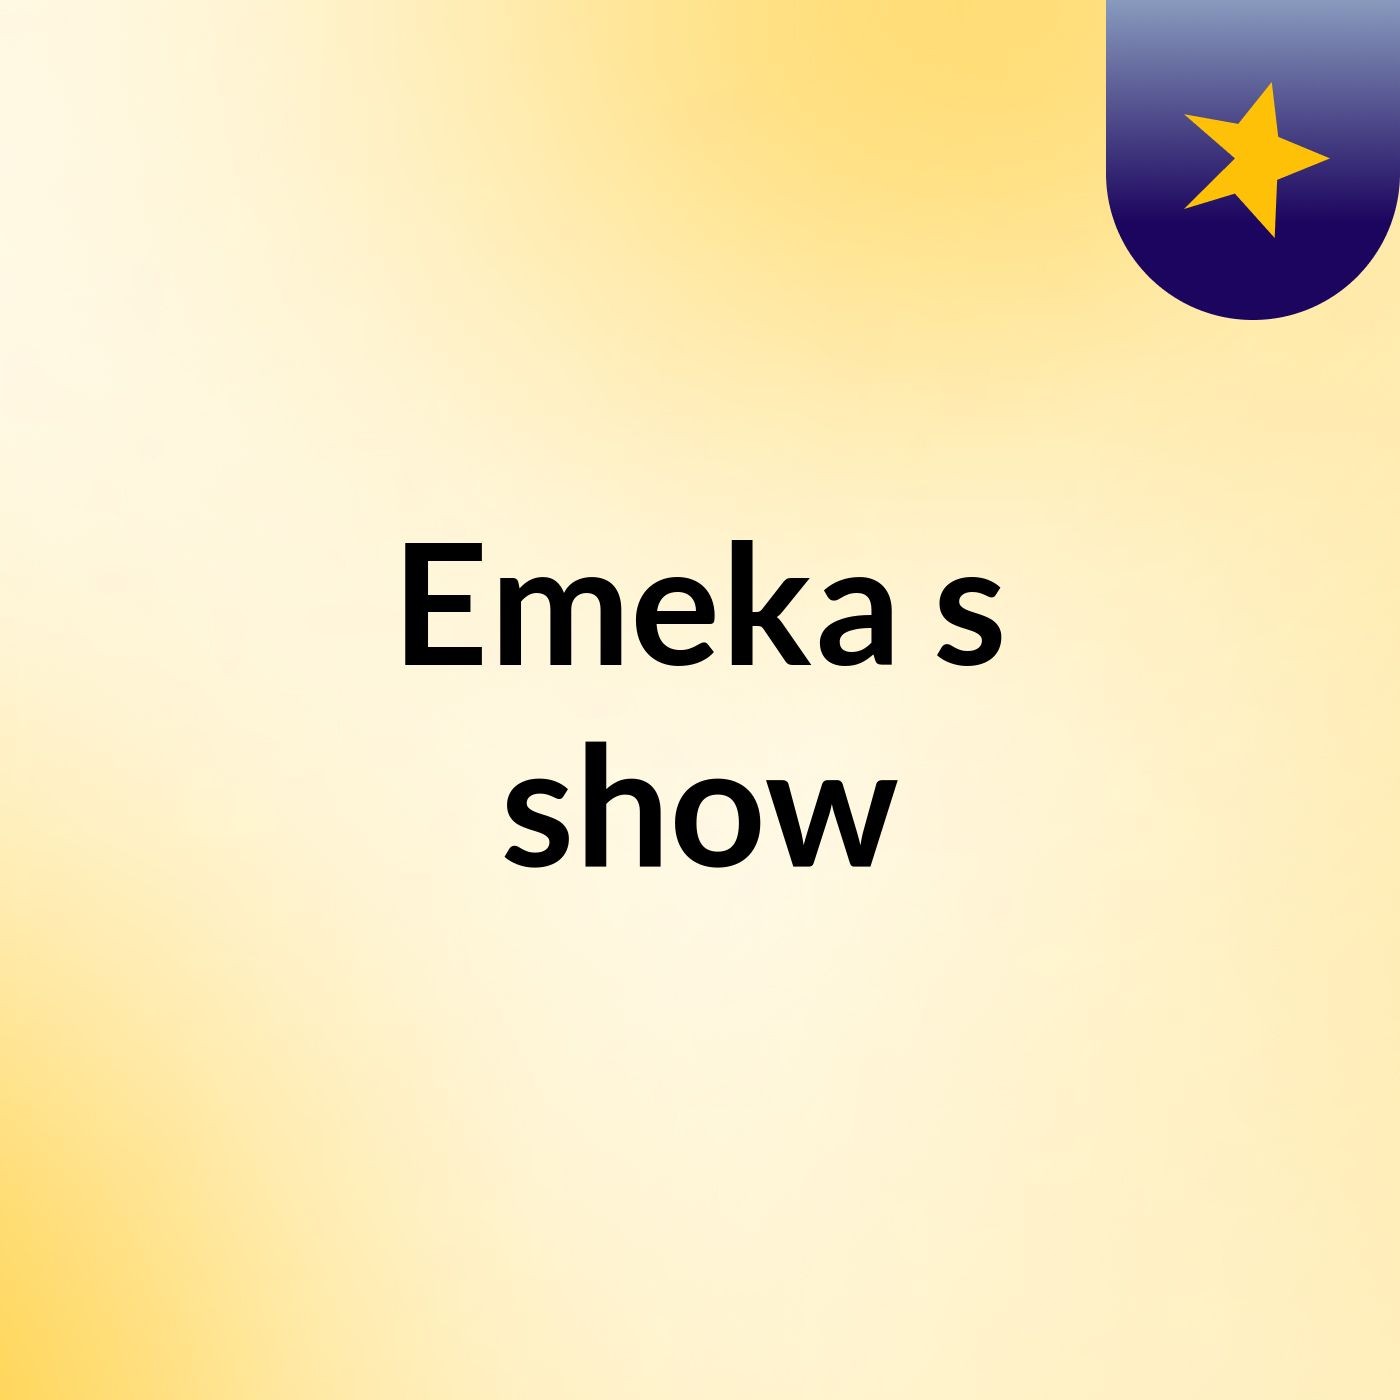 Emeka's show